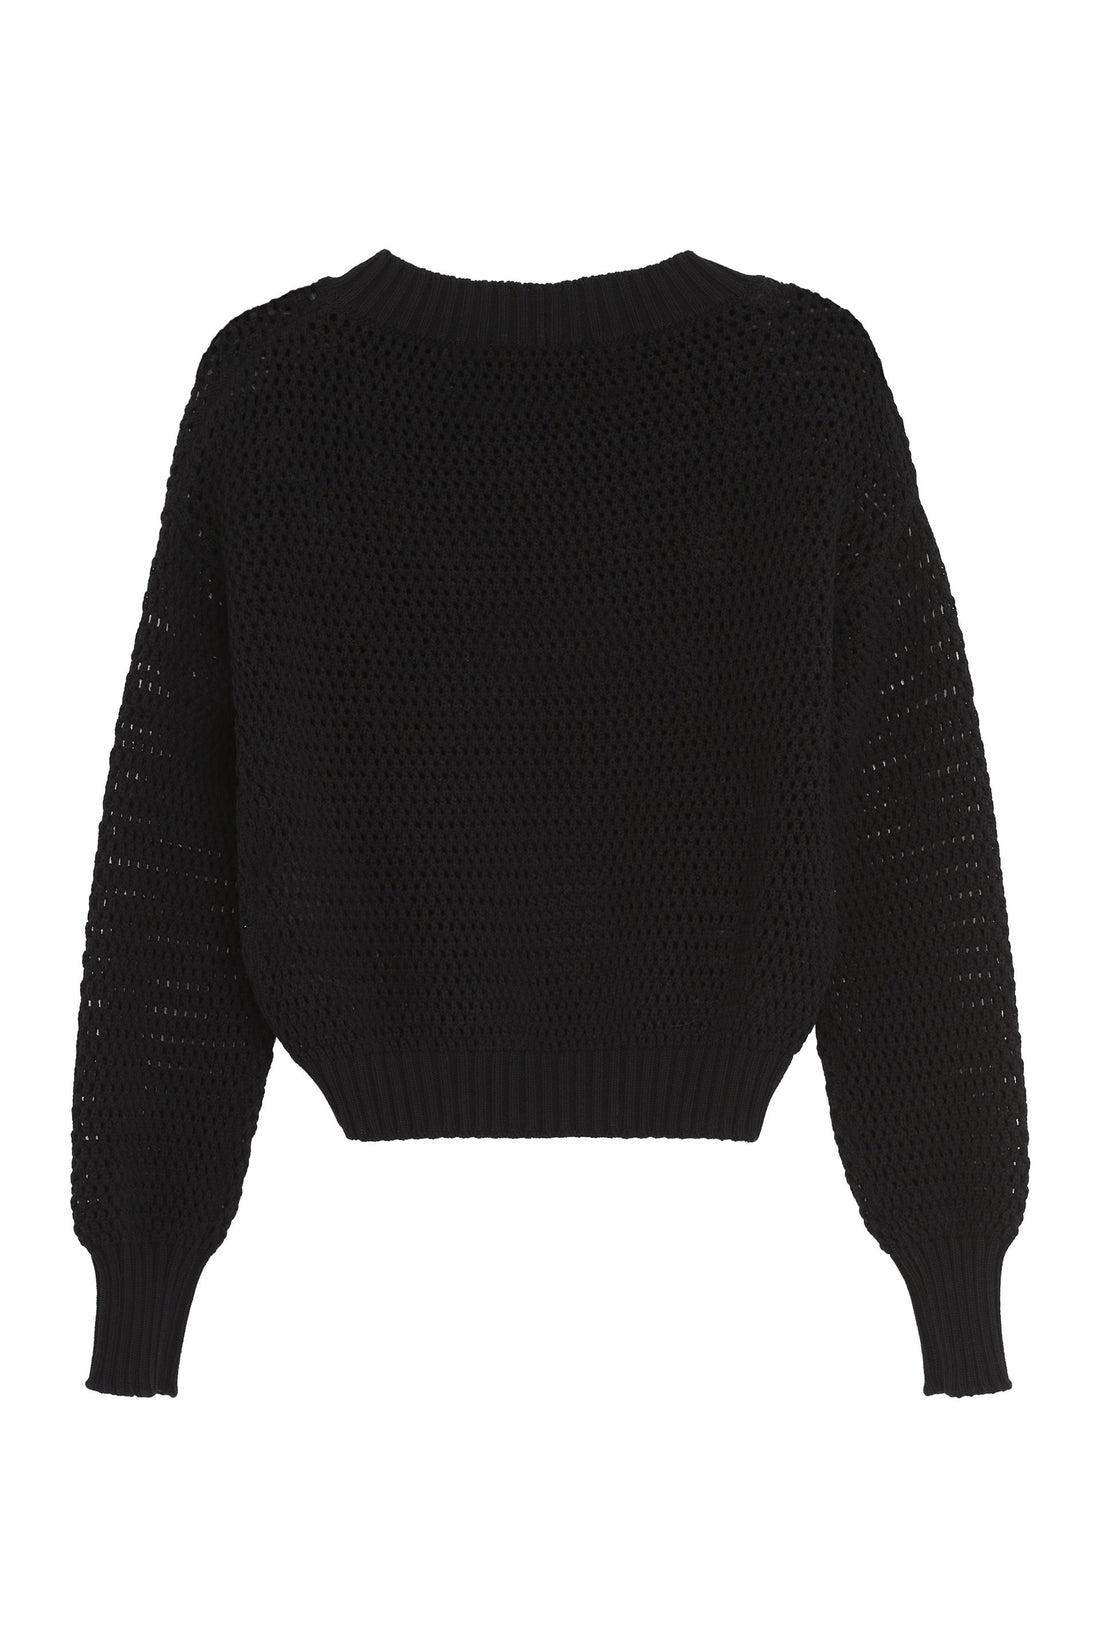 Max Mara Studio-OUTLET-SALE-Matassa cotton sweater-ARCHIVIST